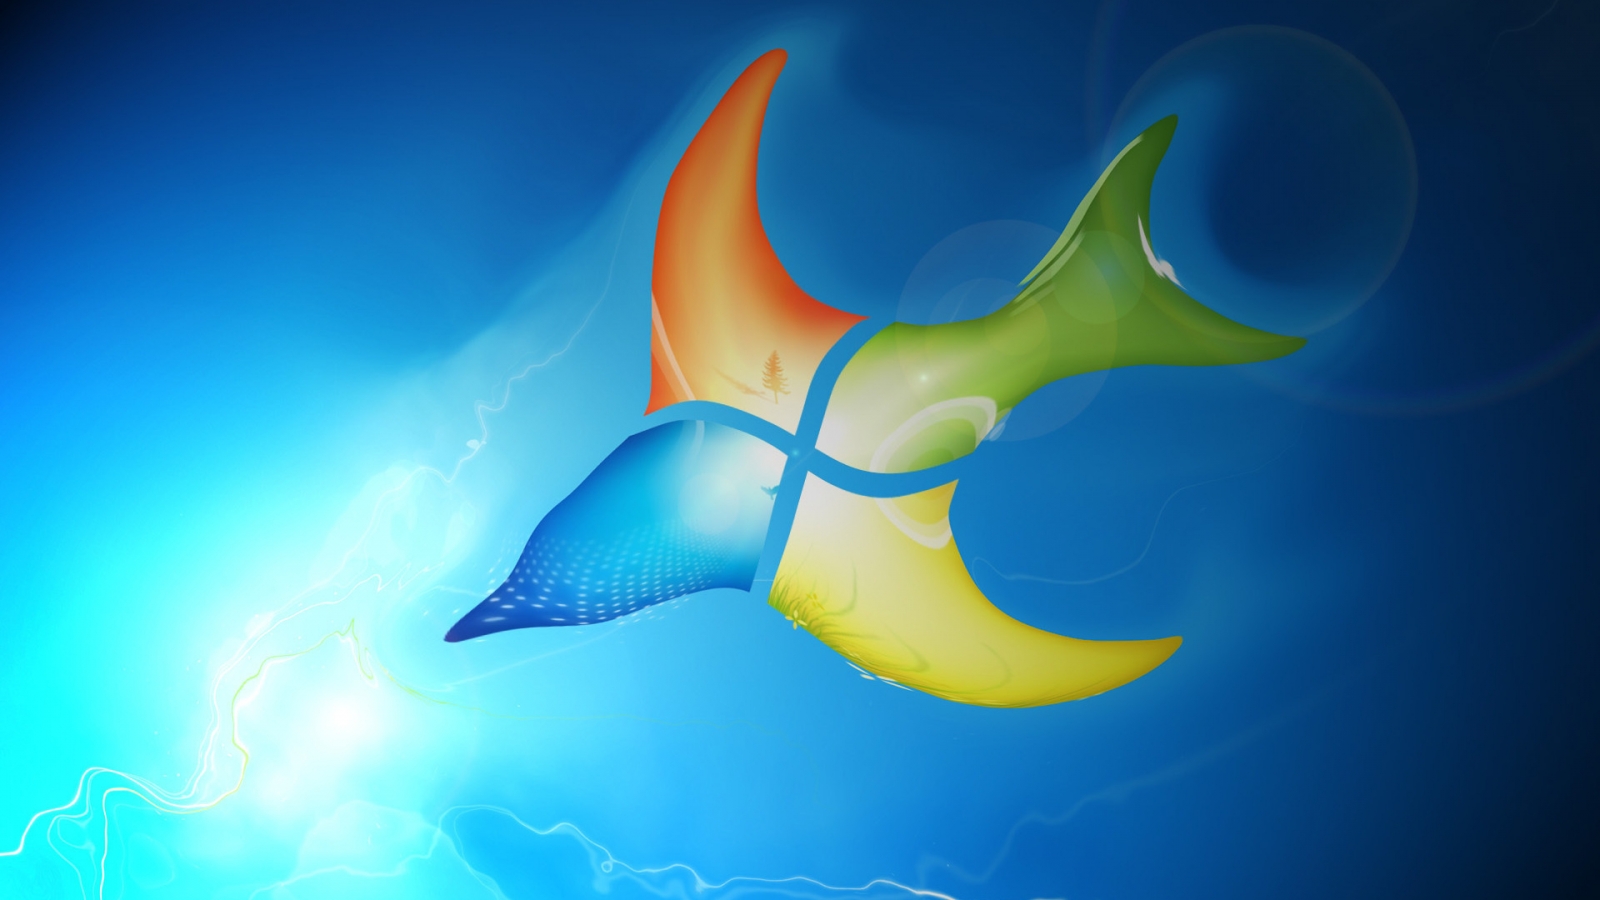 Windows Bird Logo for 1600 x 900 HDTV resolution